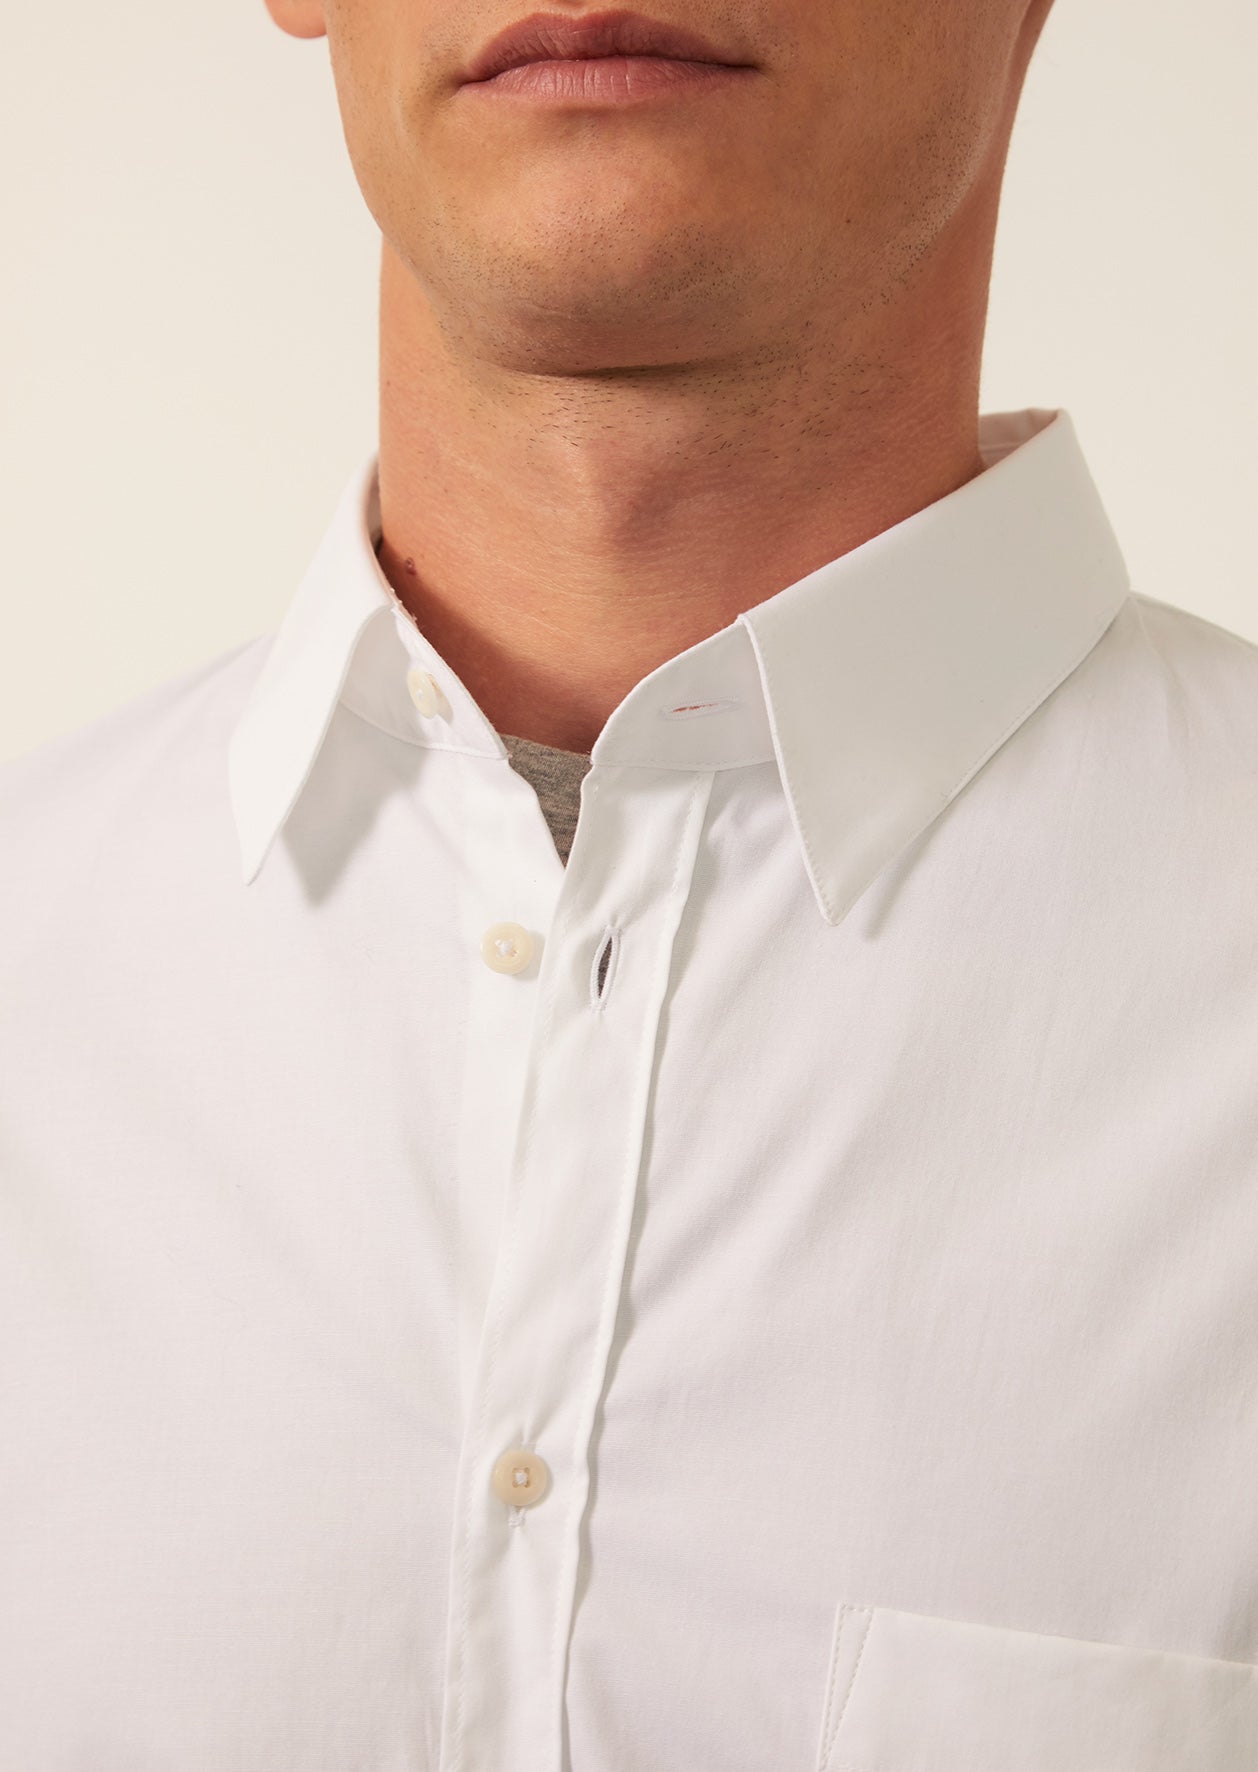 Essential shirt - Italian cotton poplin